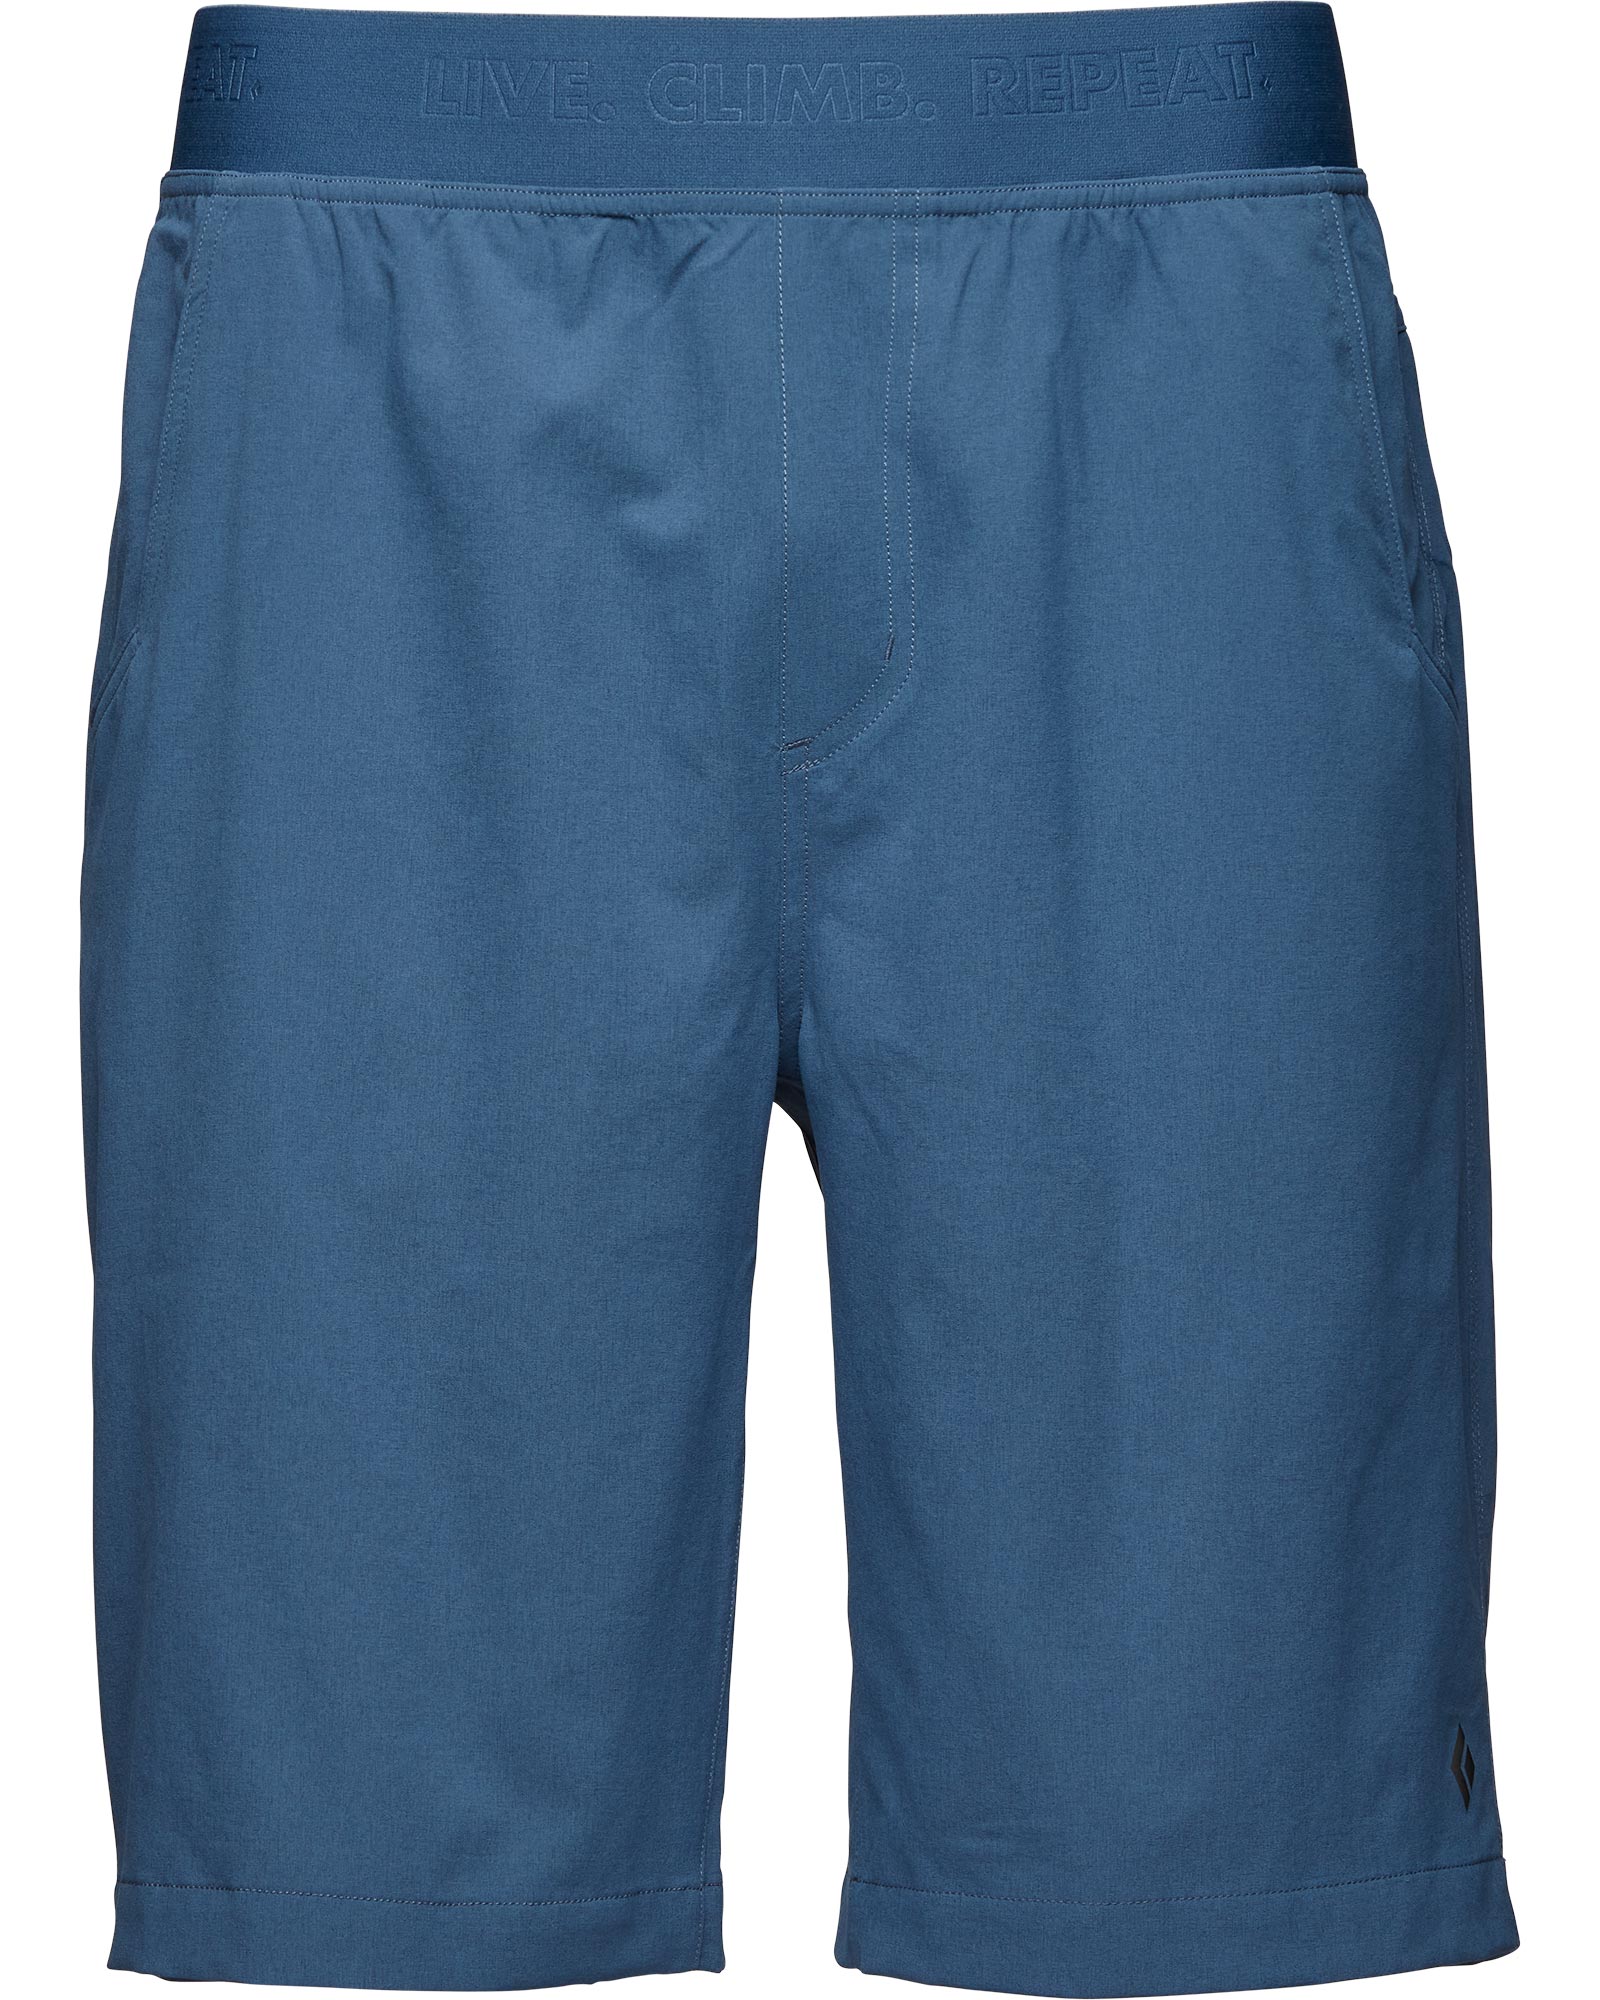 Black Diamond Sierra Men’s Shorts - Ink Blue L